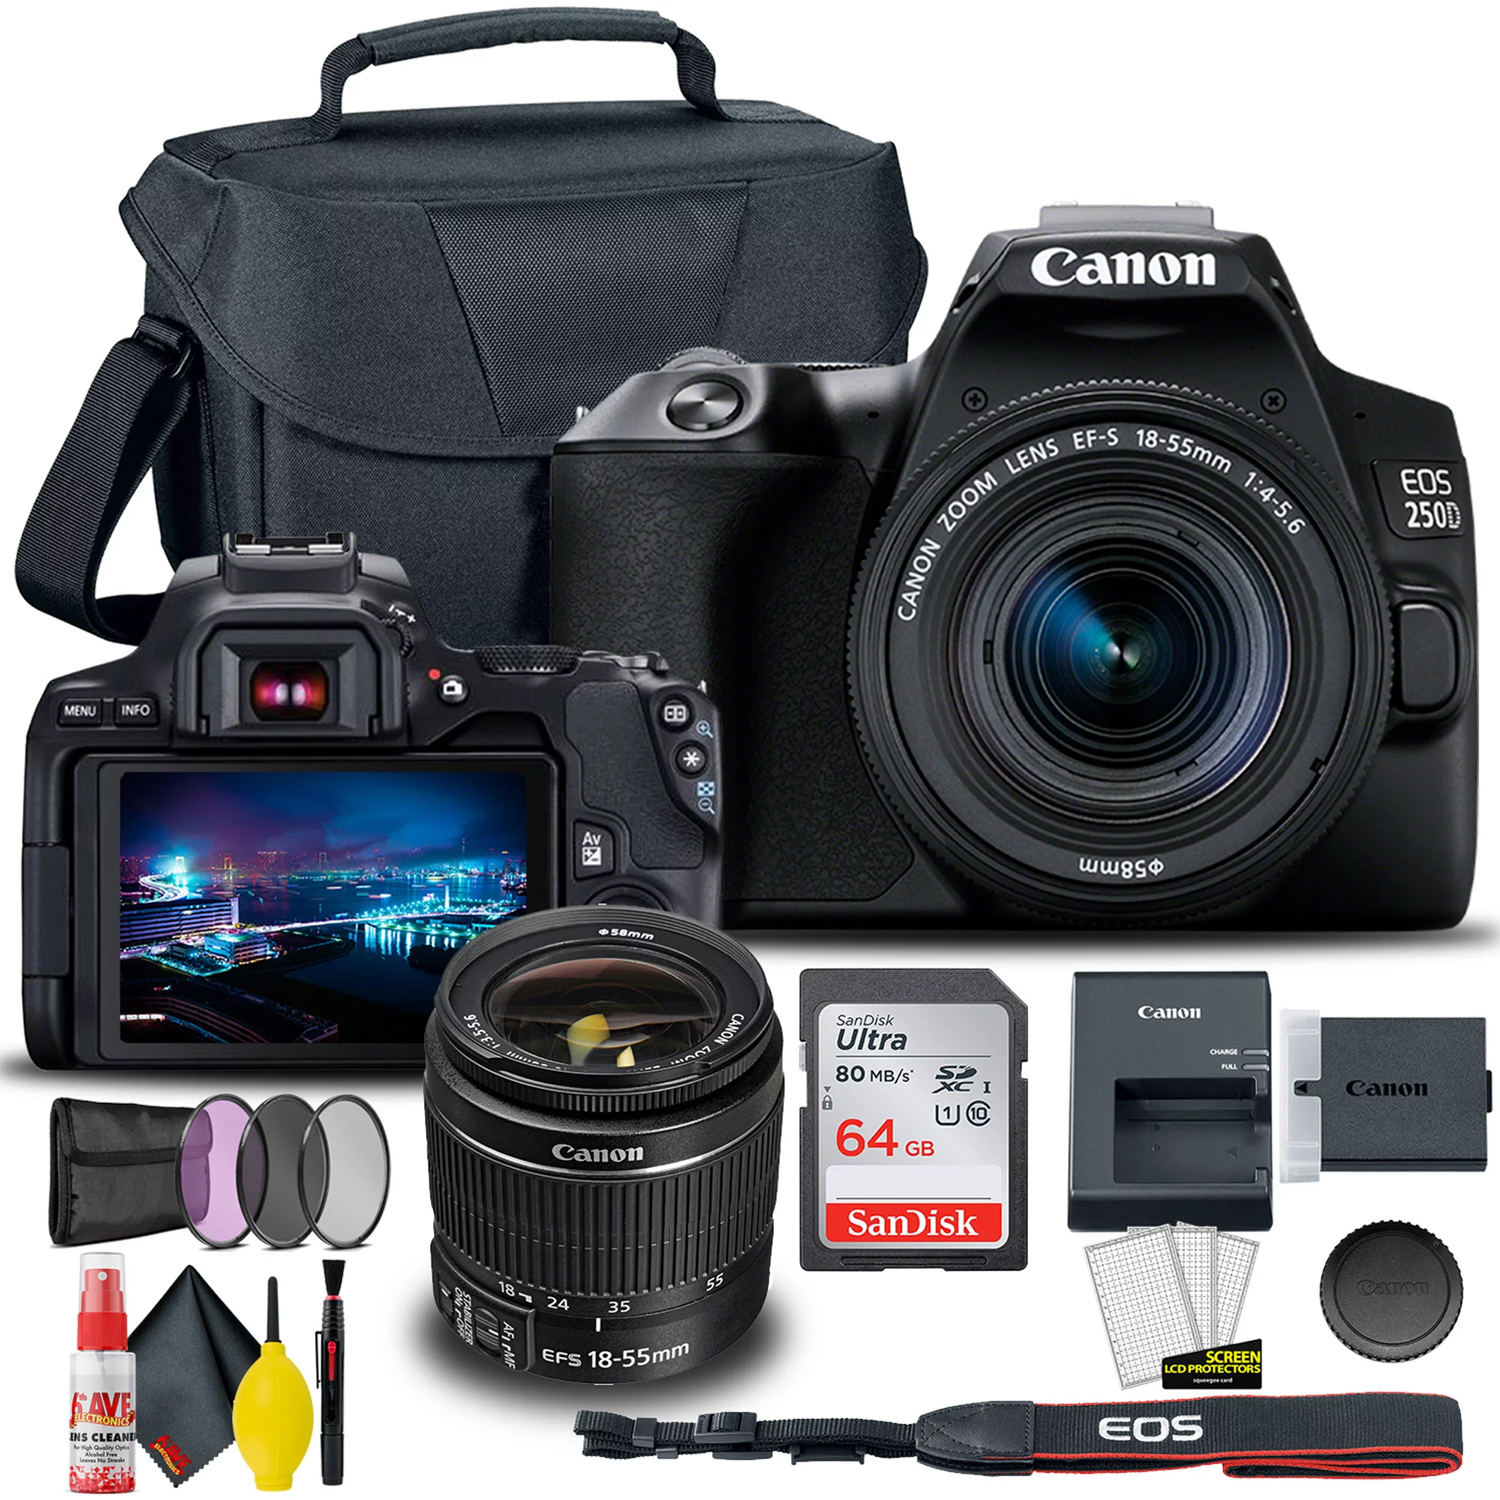 Canon EOS 250D / Rebel SL3 DSLR Camera with 18-55mm Lens (Black) + Creative Filter Set, EOS Camera Bag +  Sandisk Ultra 64GB Card + Electronics Cleaning Set, And More (International Model) - image 1 of 7